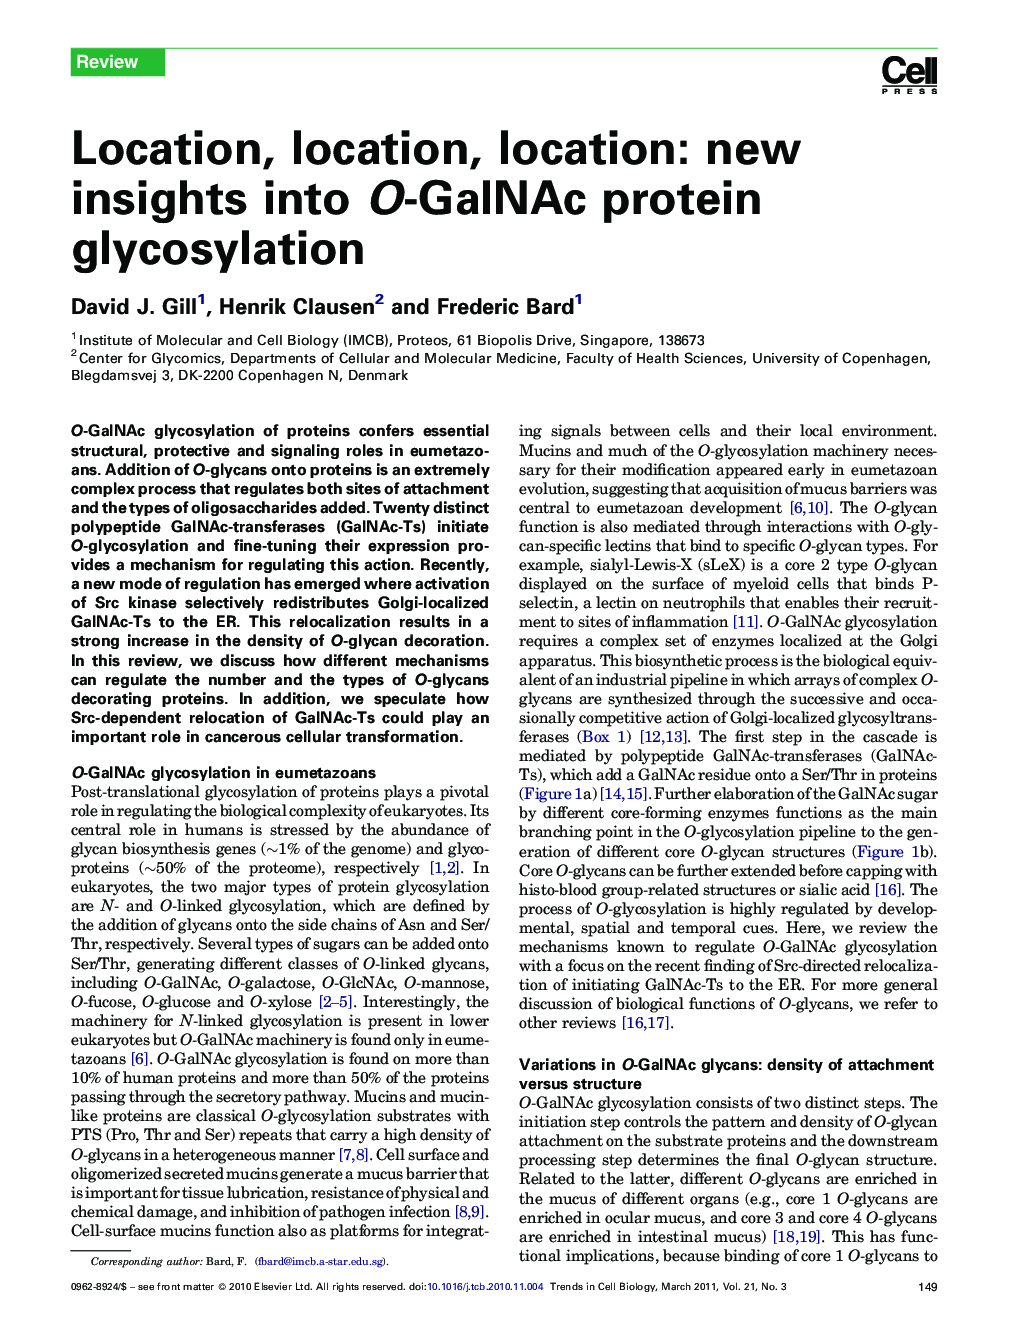 Location, location, location: new insights into O-GalNAc protein glycosylation